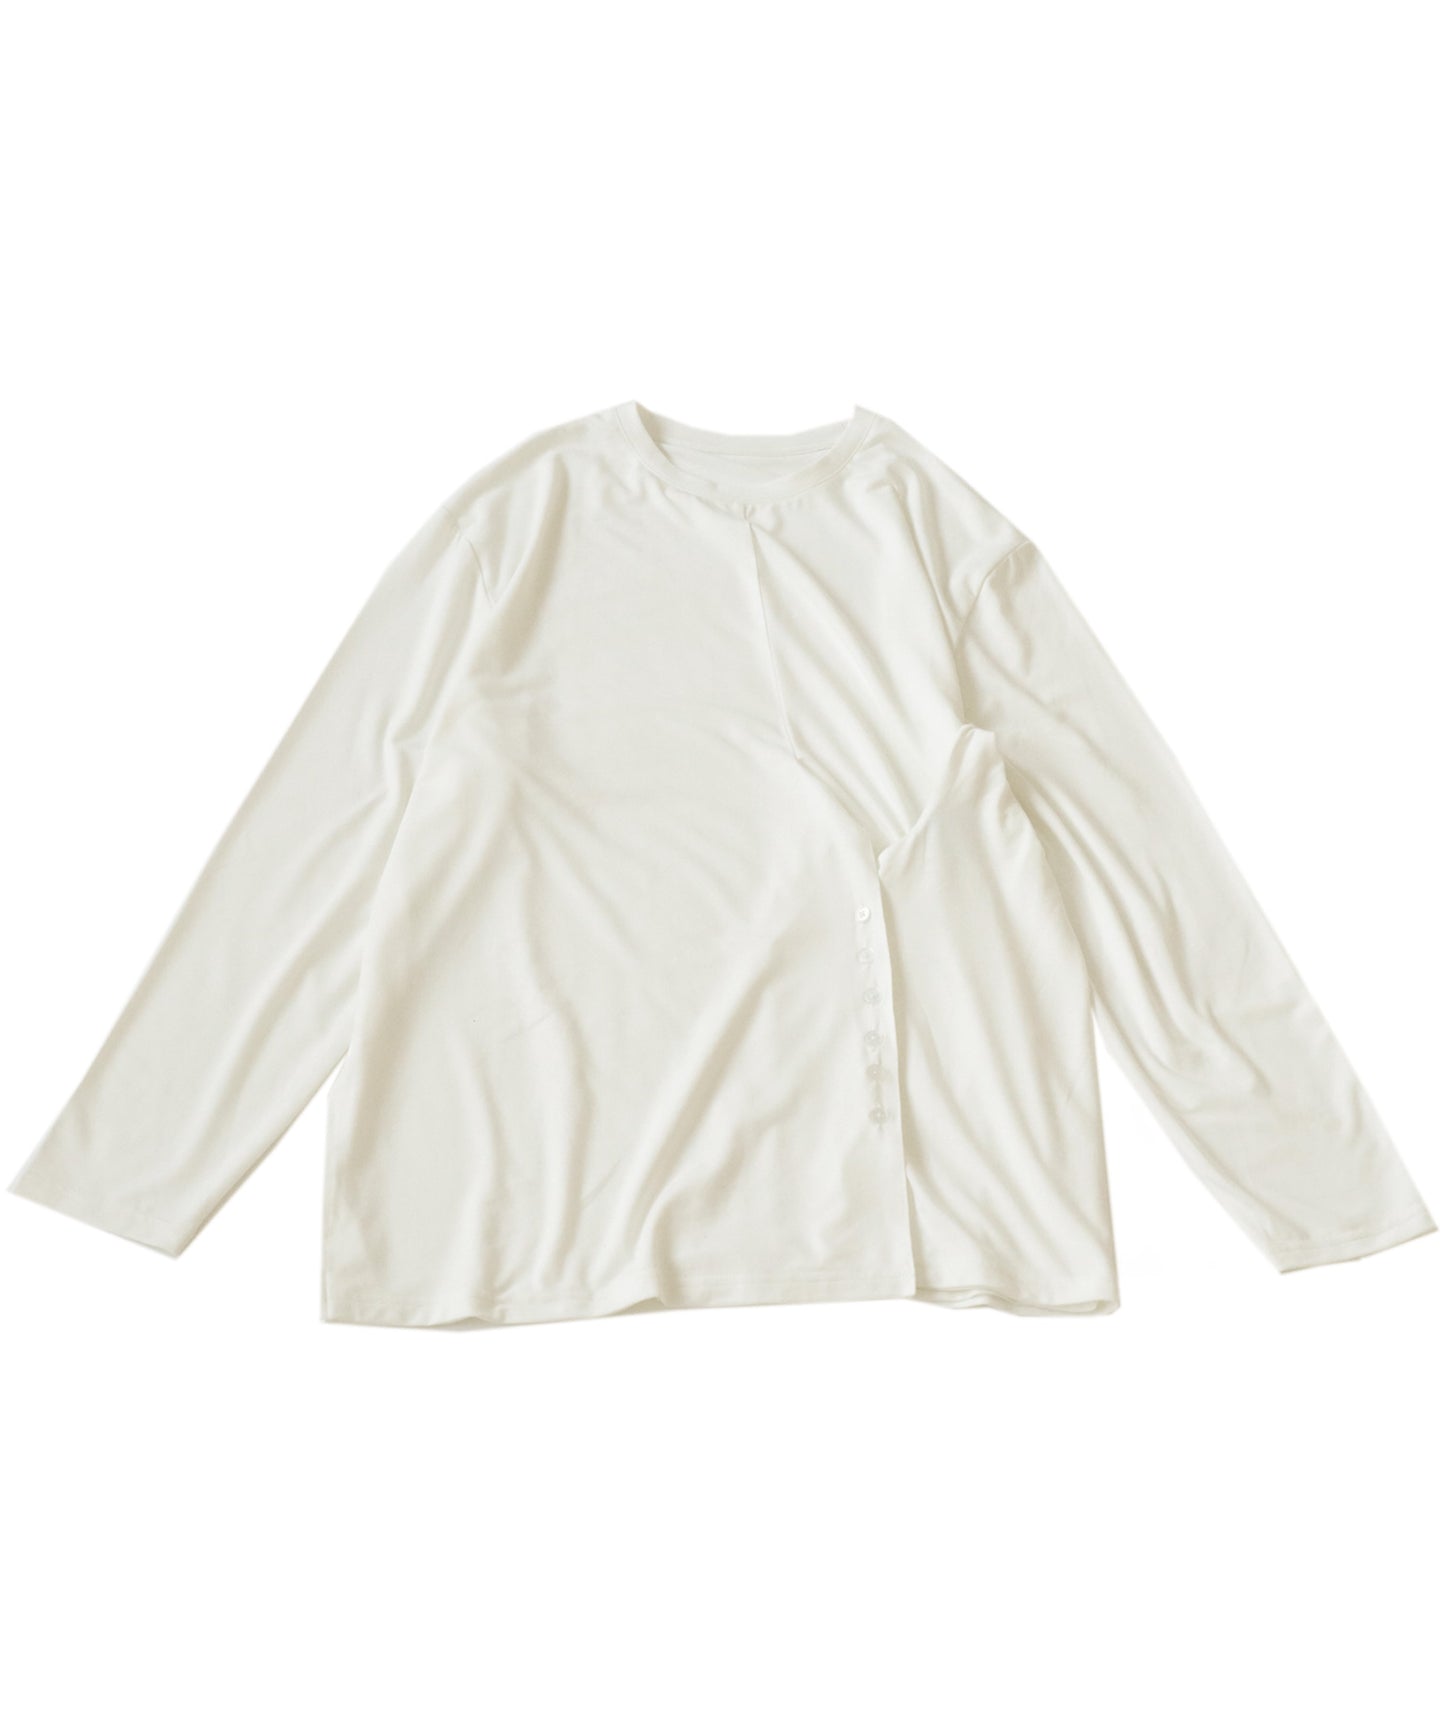 Cool touch UV cut Multi shirt Ladies long sleeves Shirt